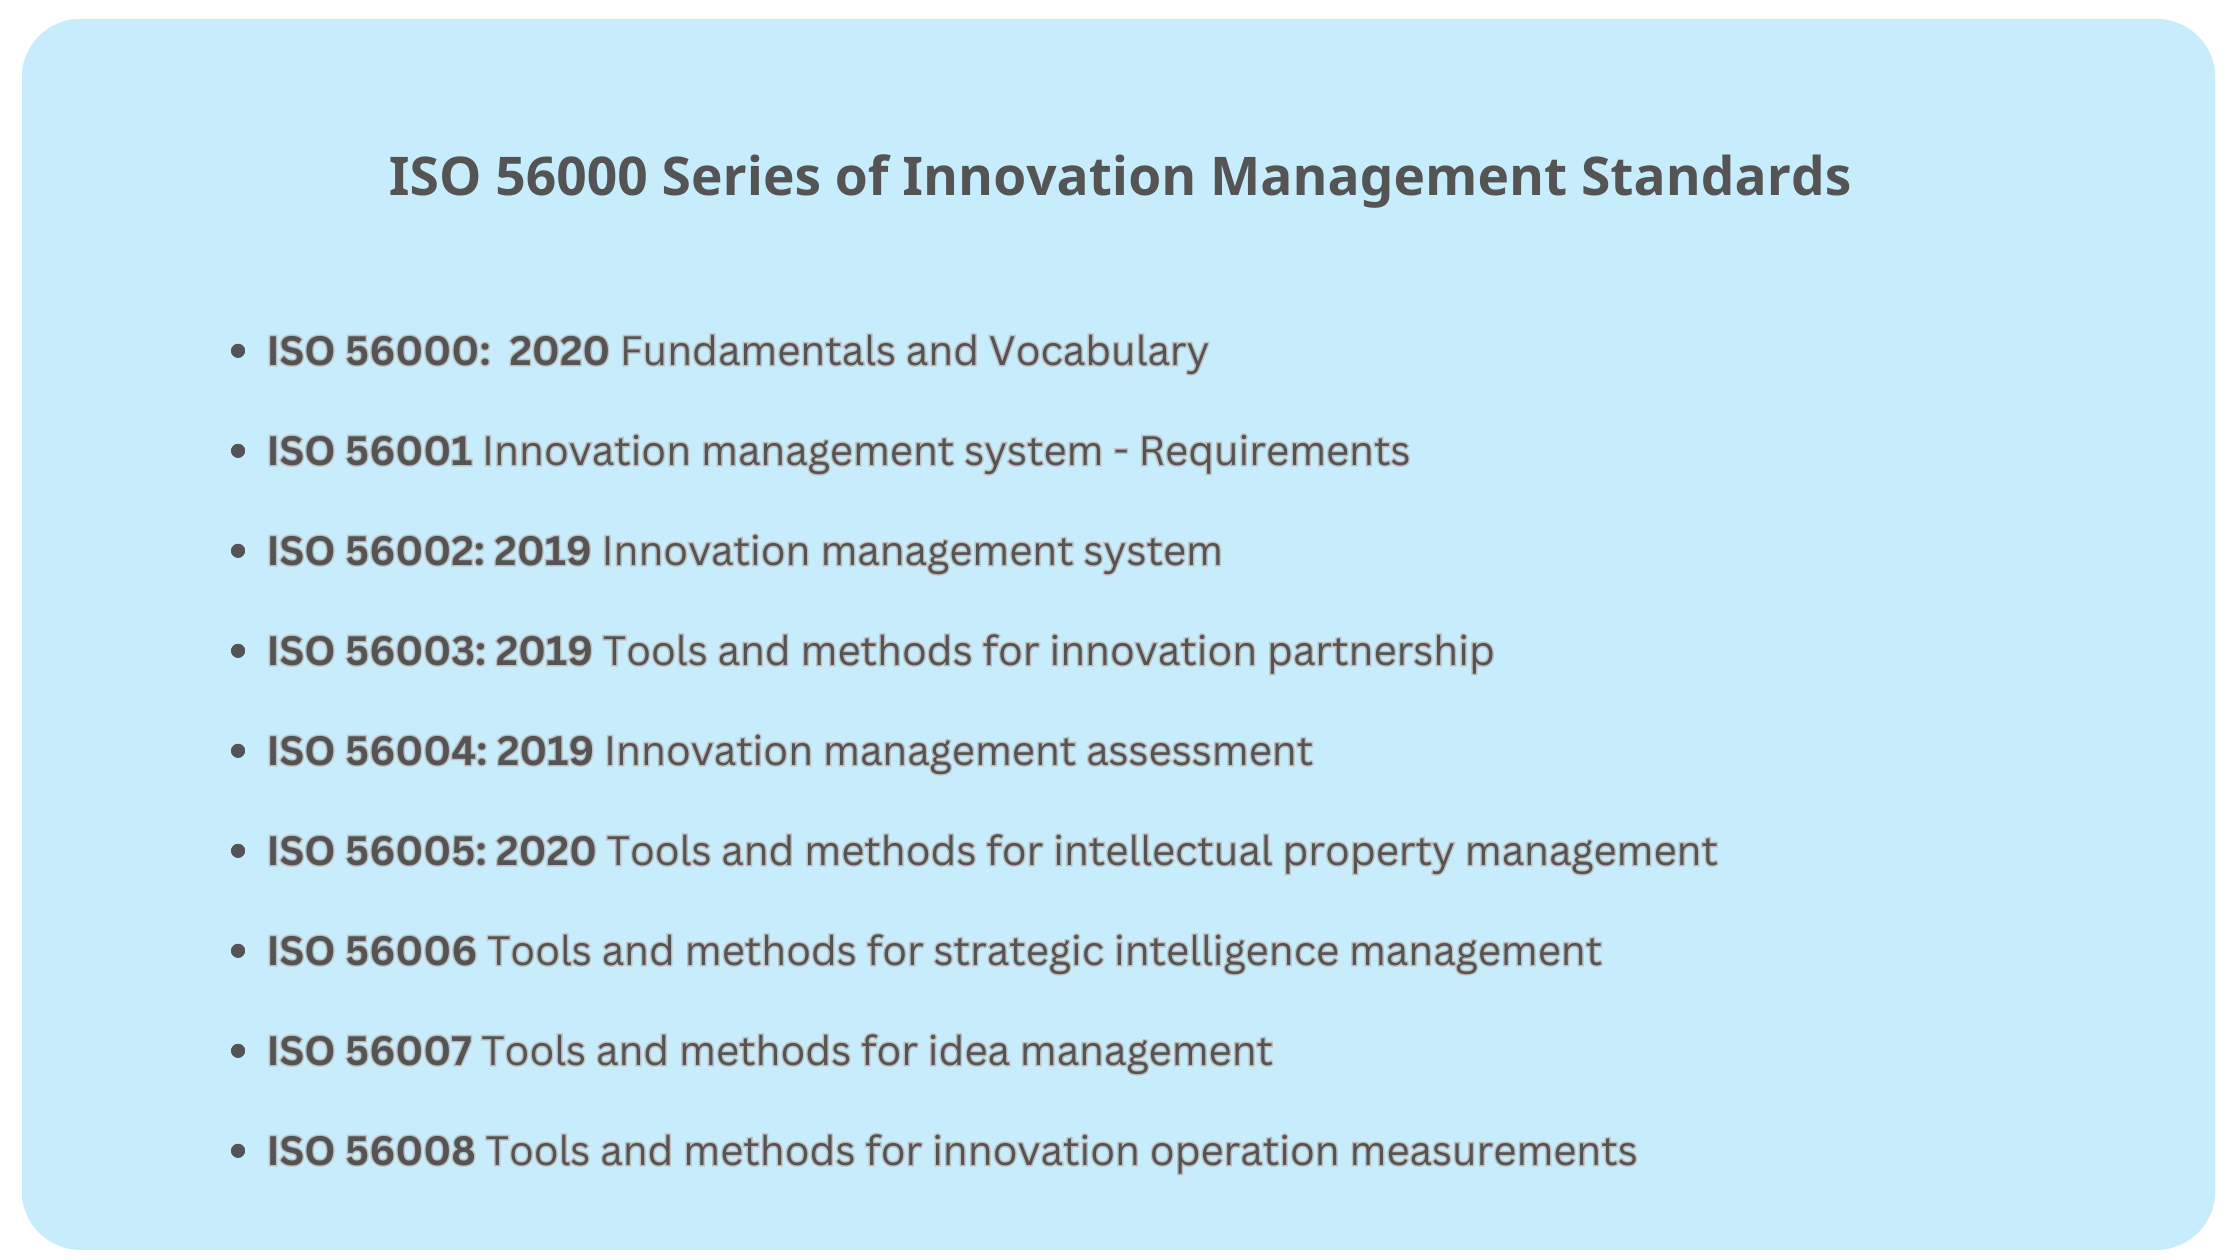 ISO standards for innovation